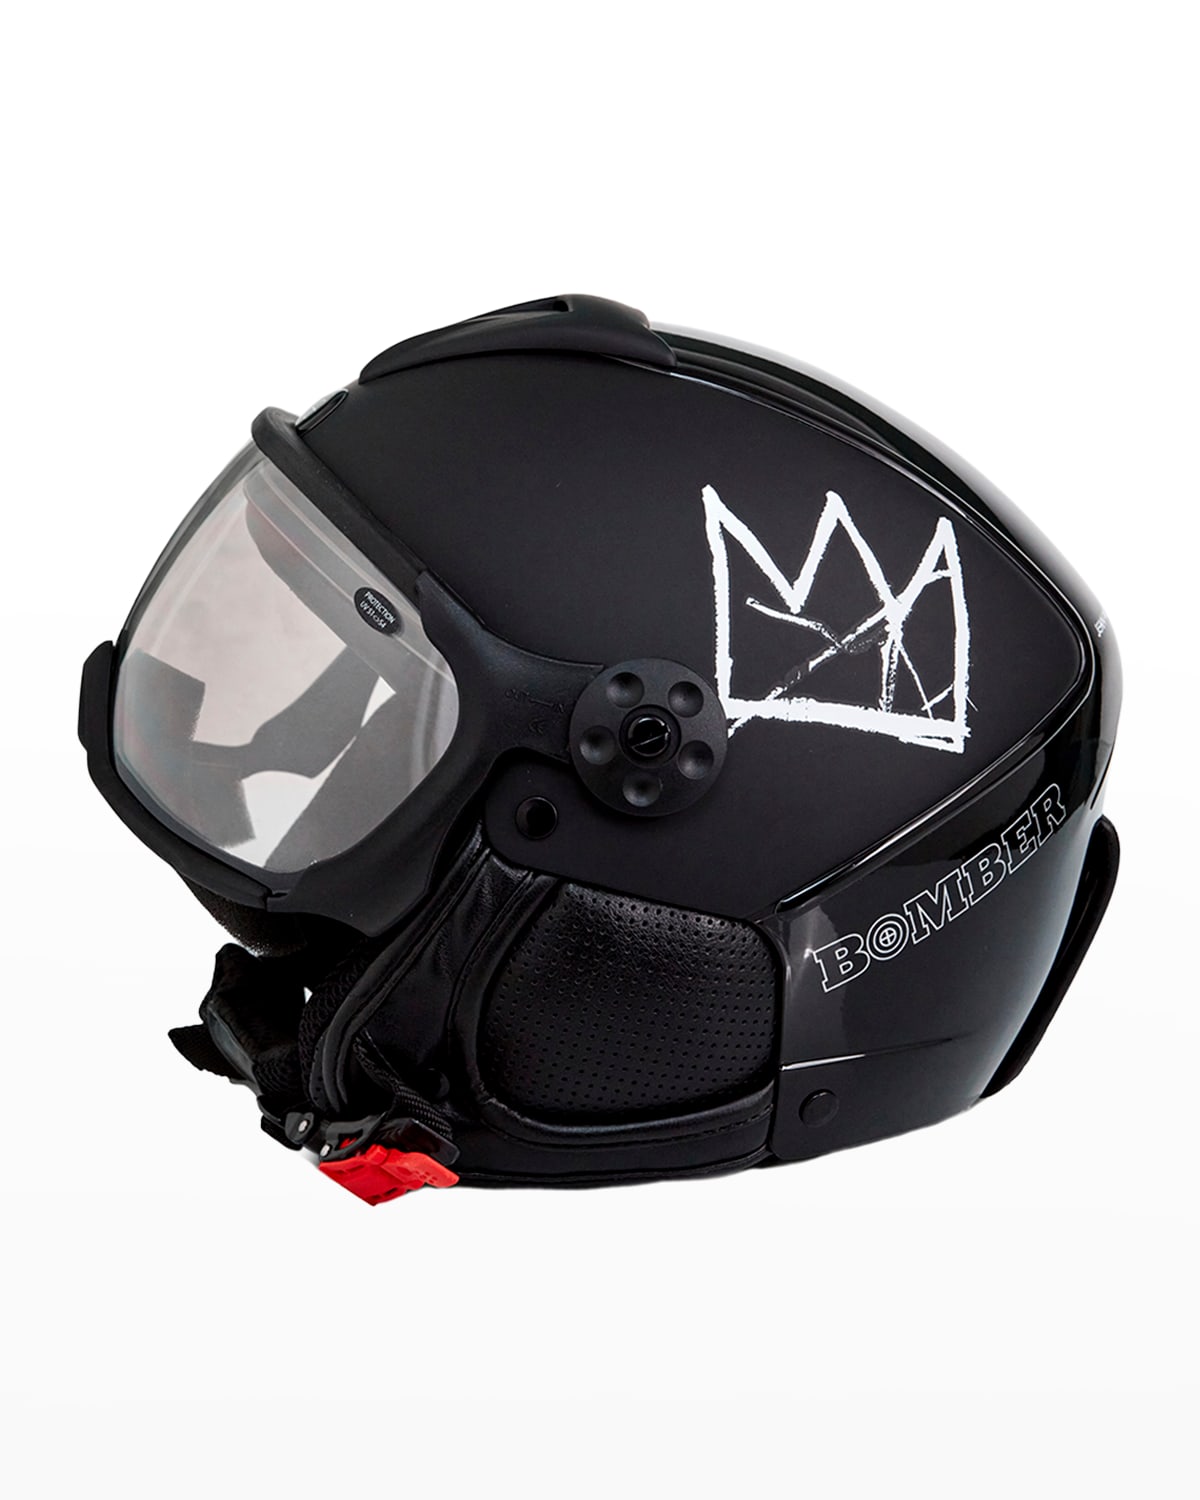 Basquiat Black Evil Thoughts Helmet